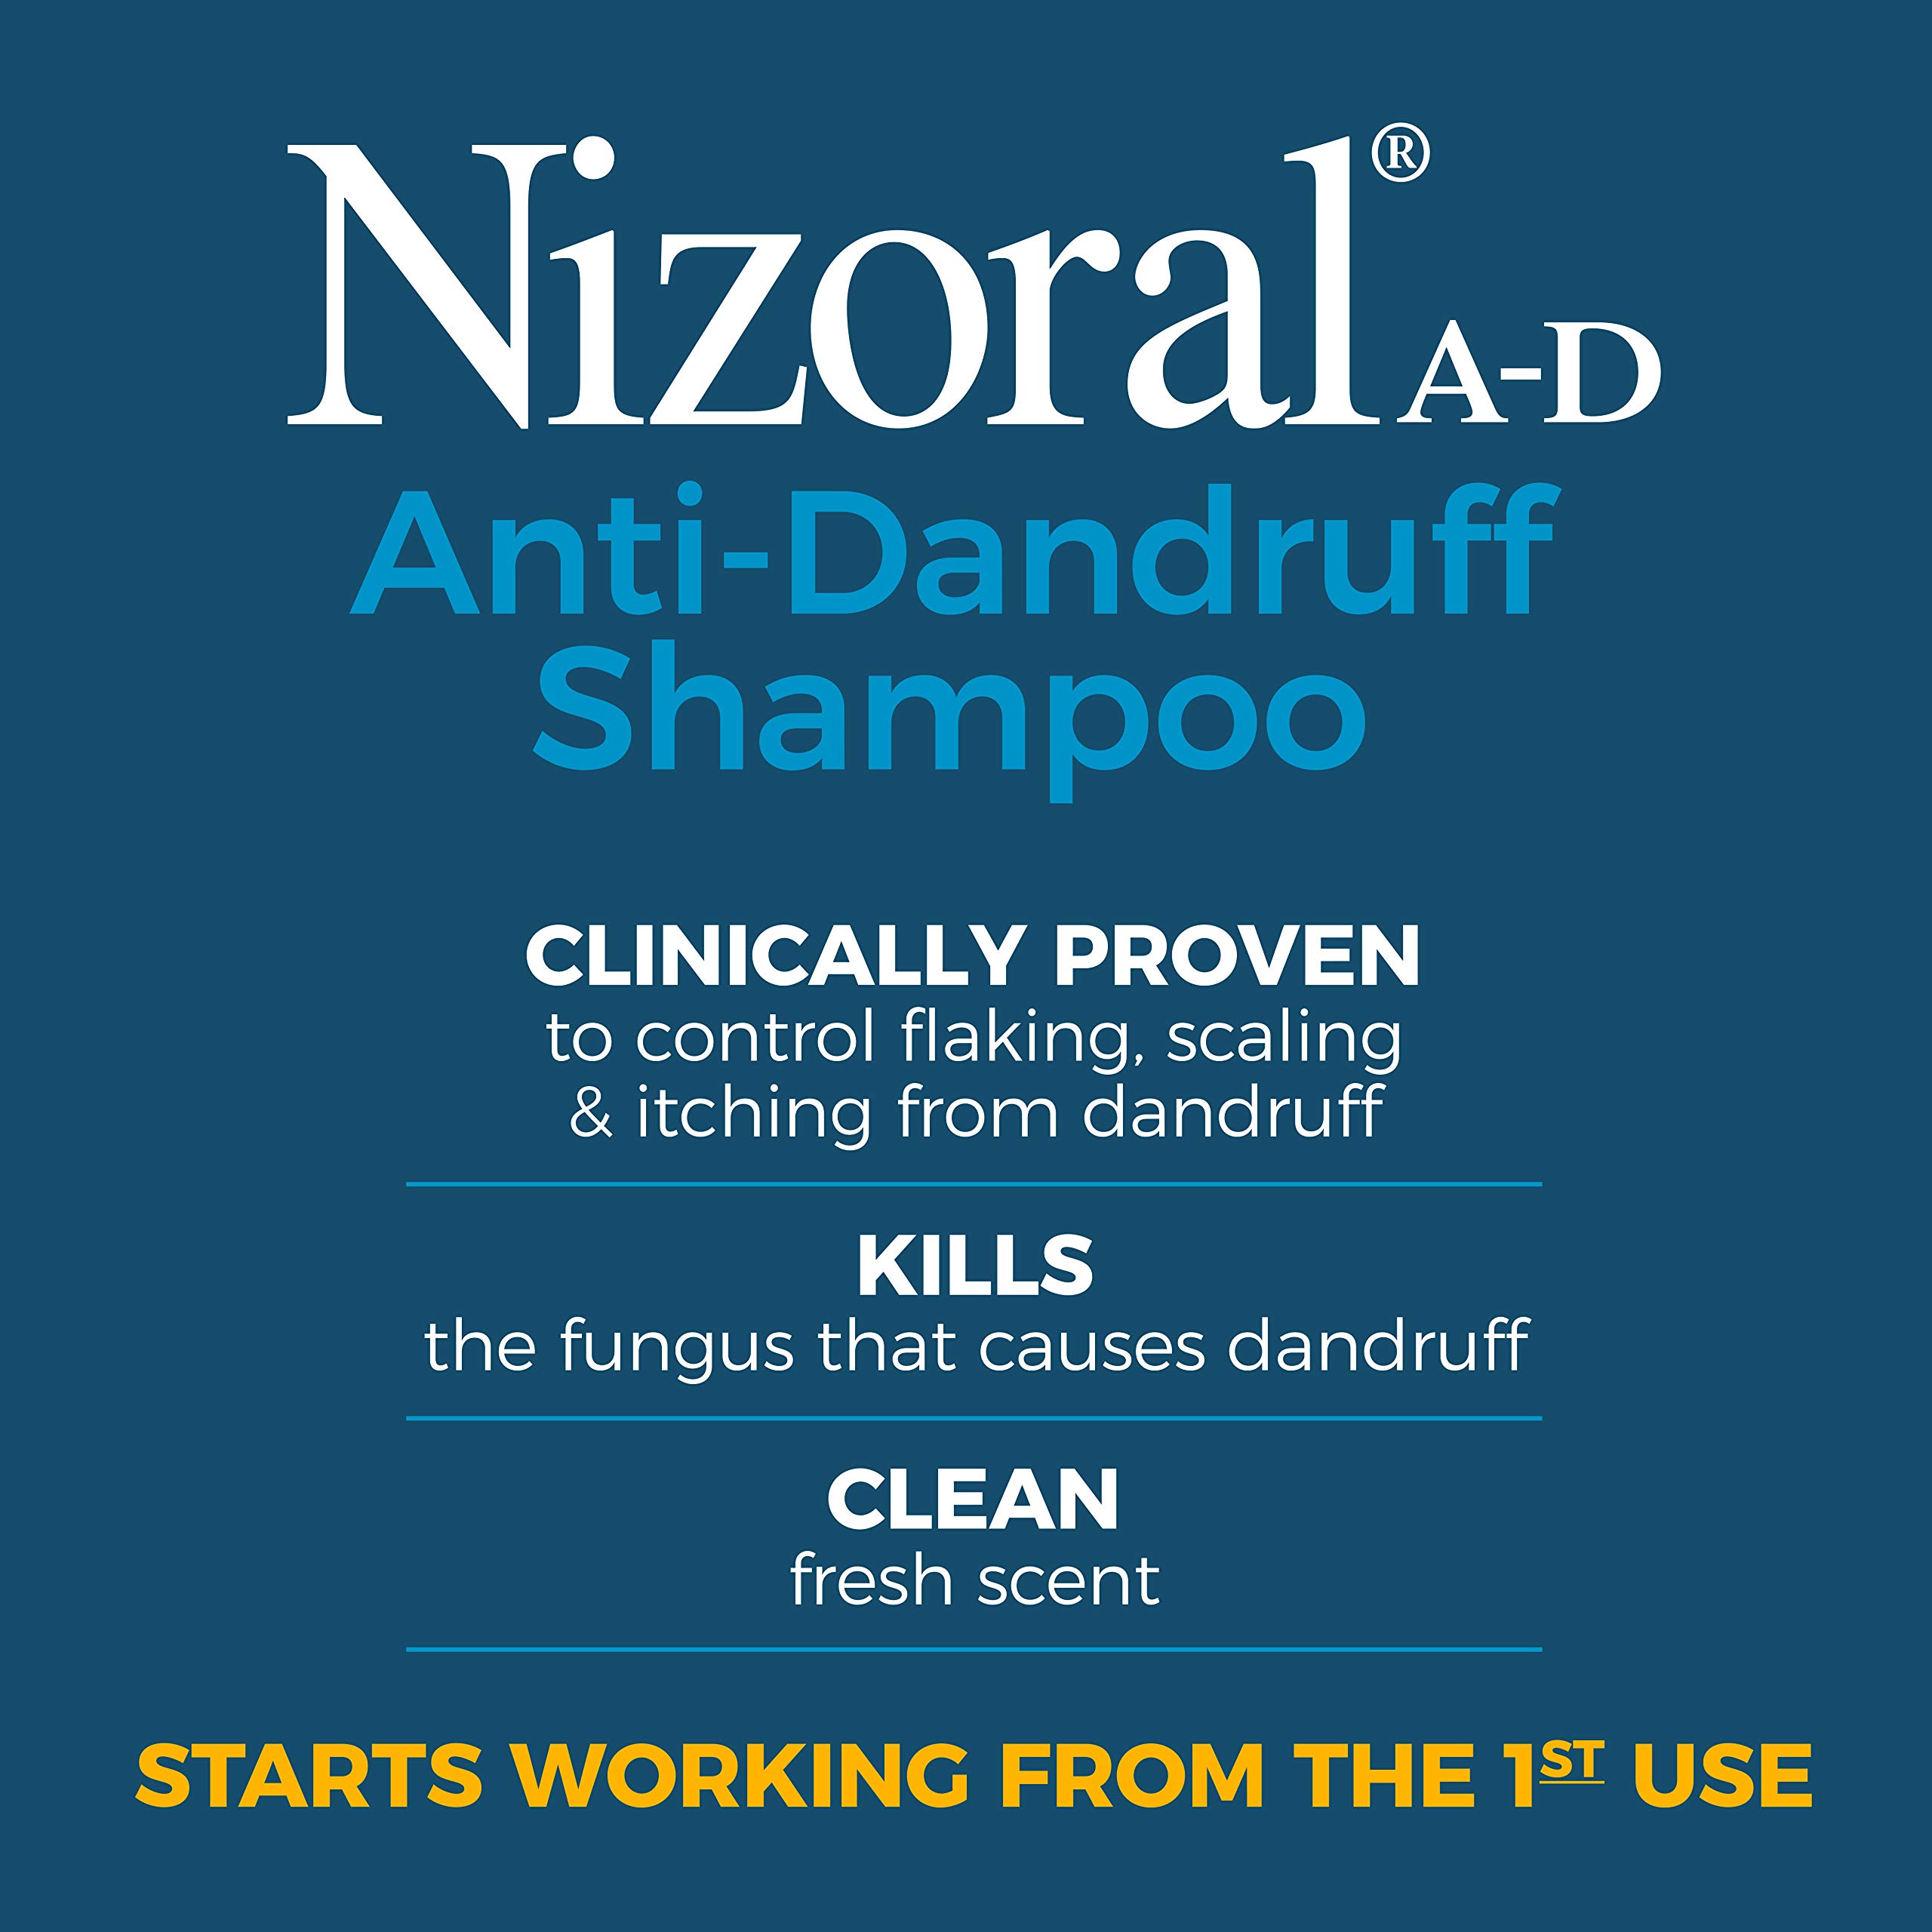 Nizoral AD AntiDandruff Shampoo, Fresh, 4 Fl Oz